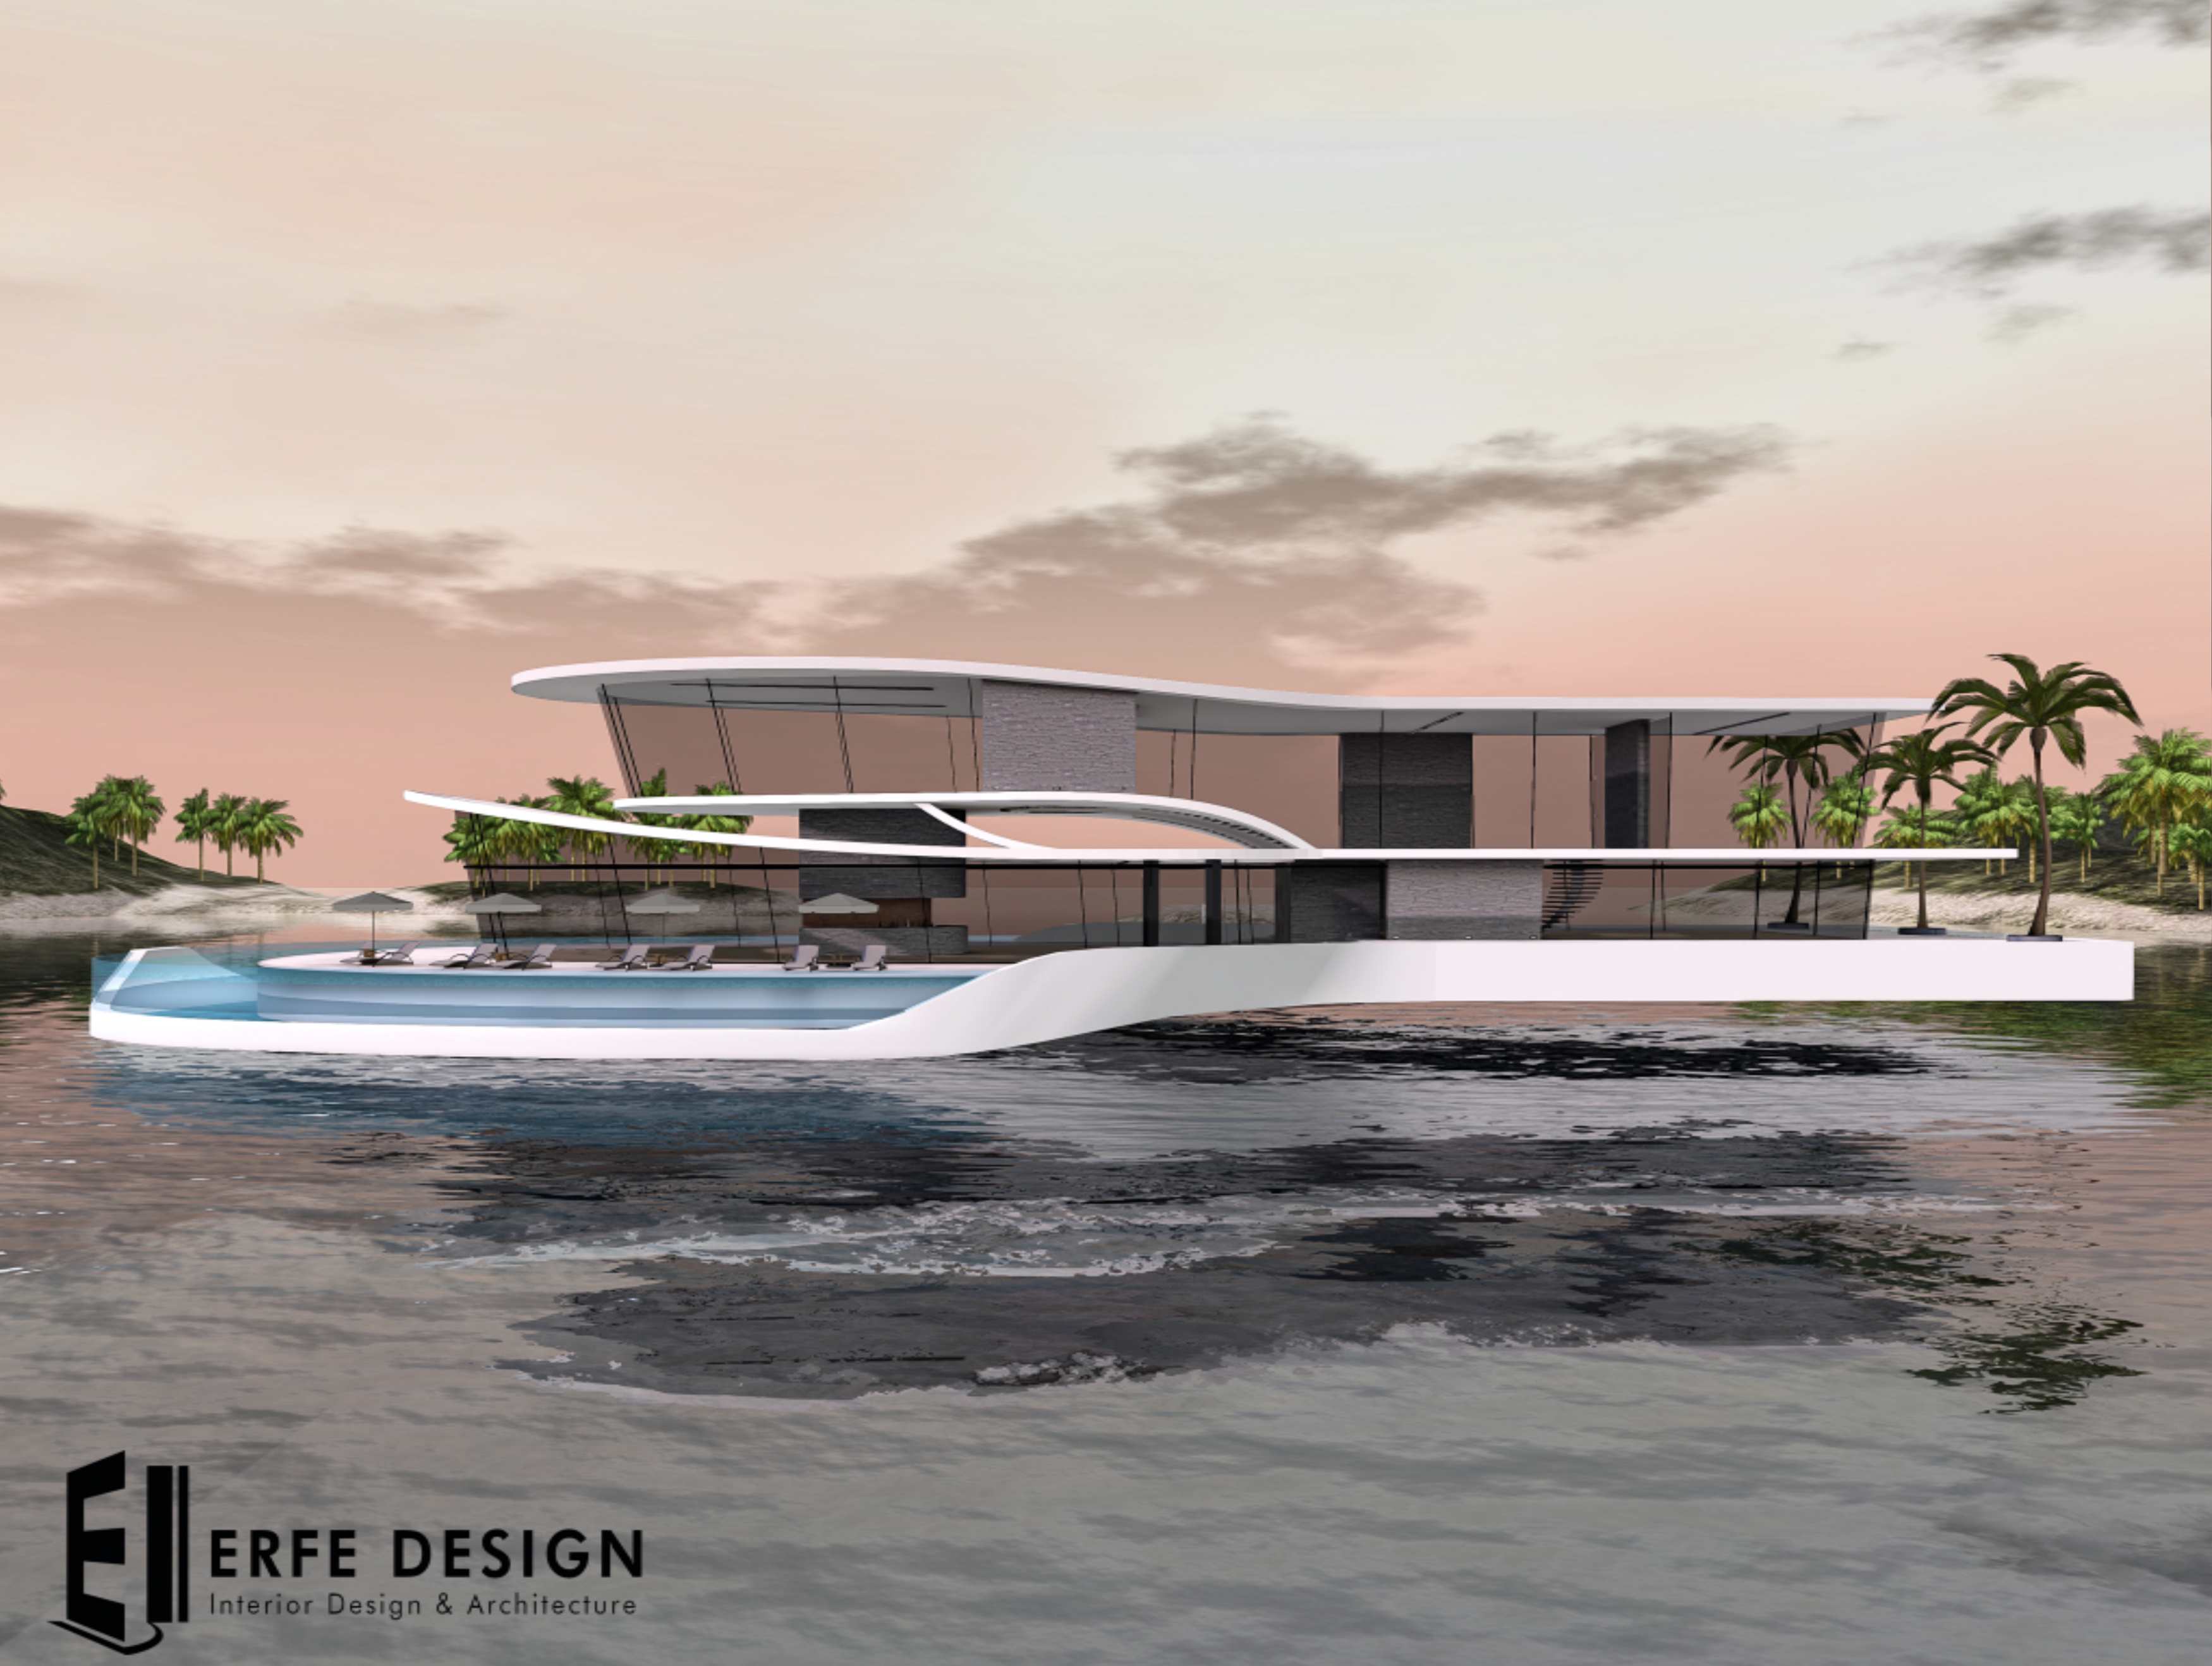 Erfe Design – Heavenly House